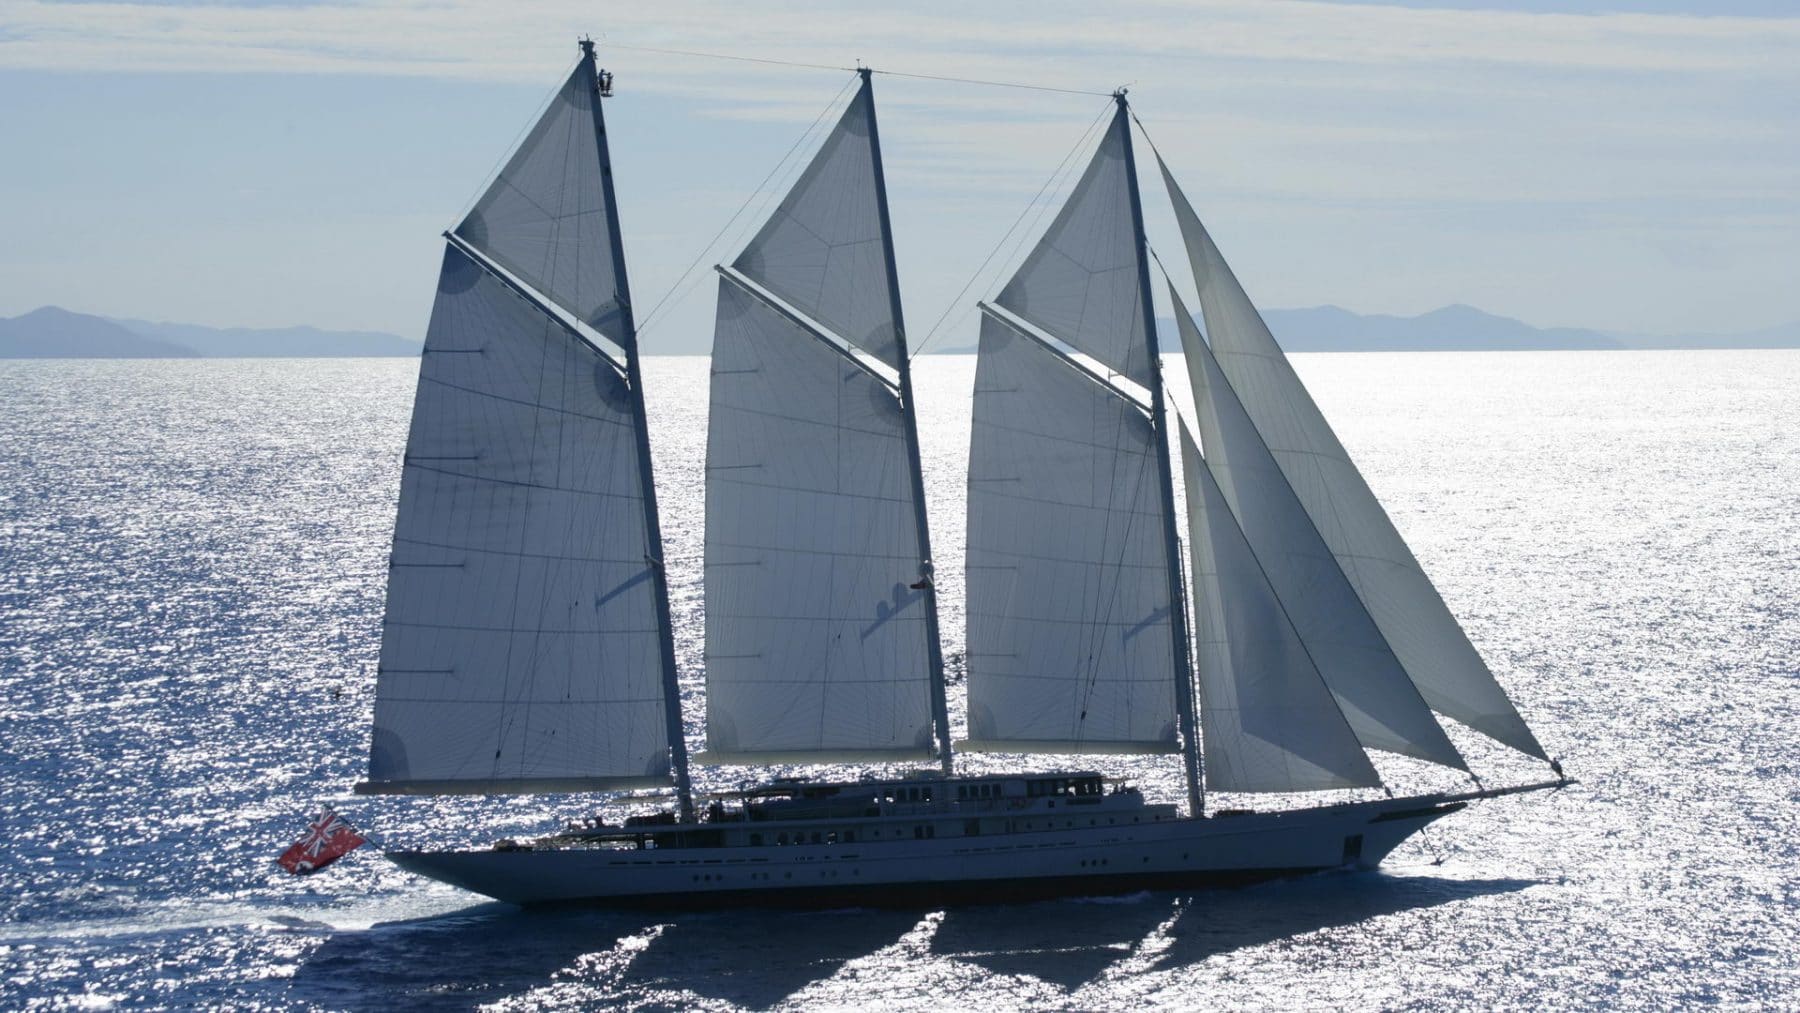 Cruising Profile Of The 90m Royal Huisman Superyacht